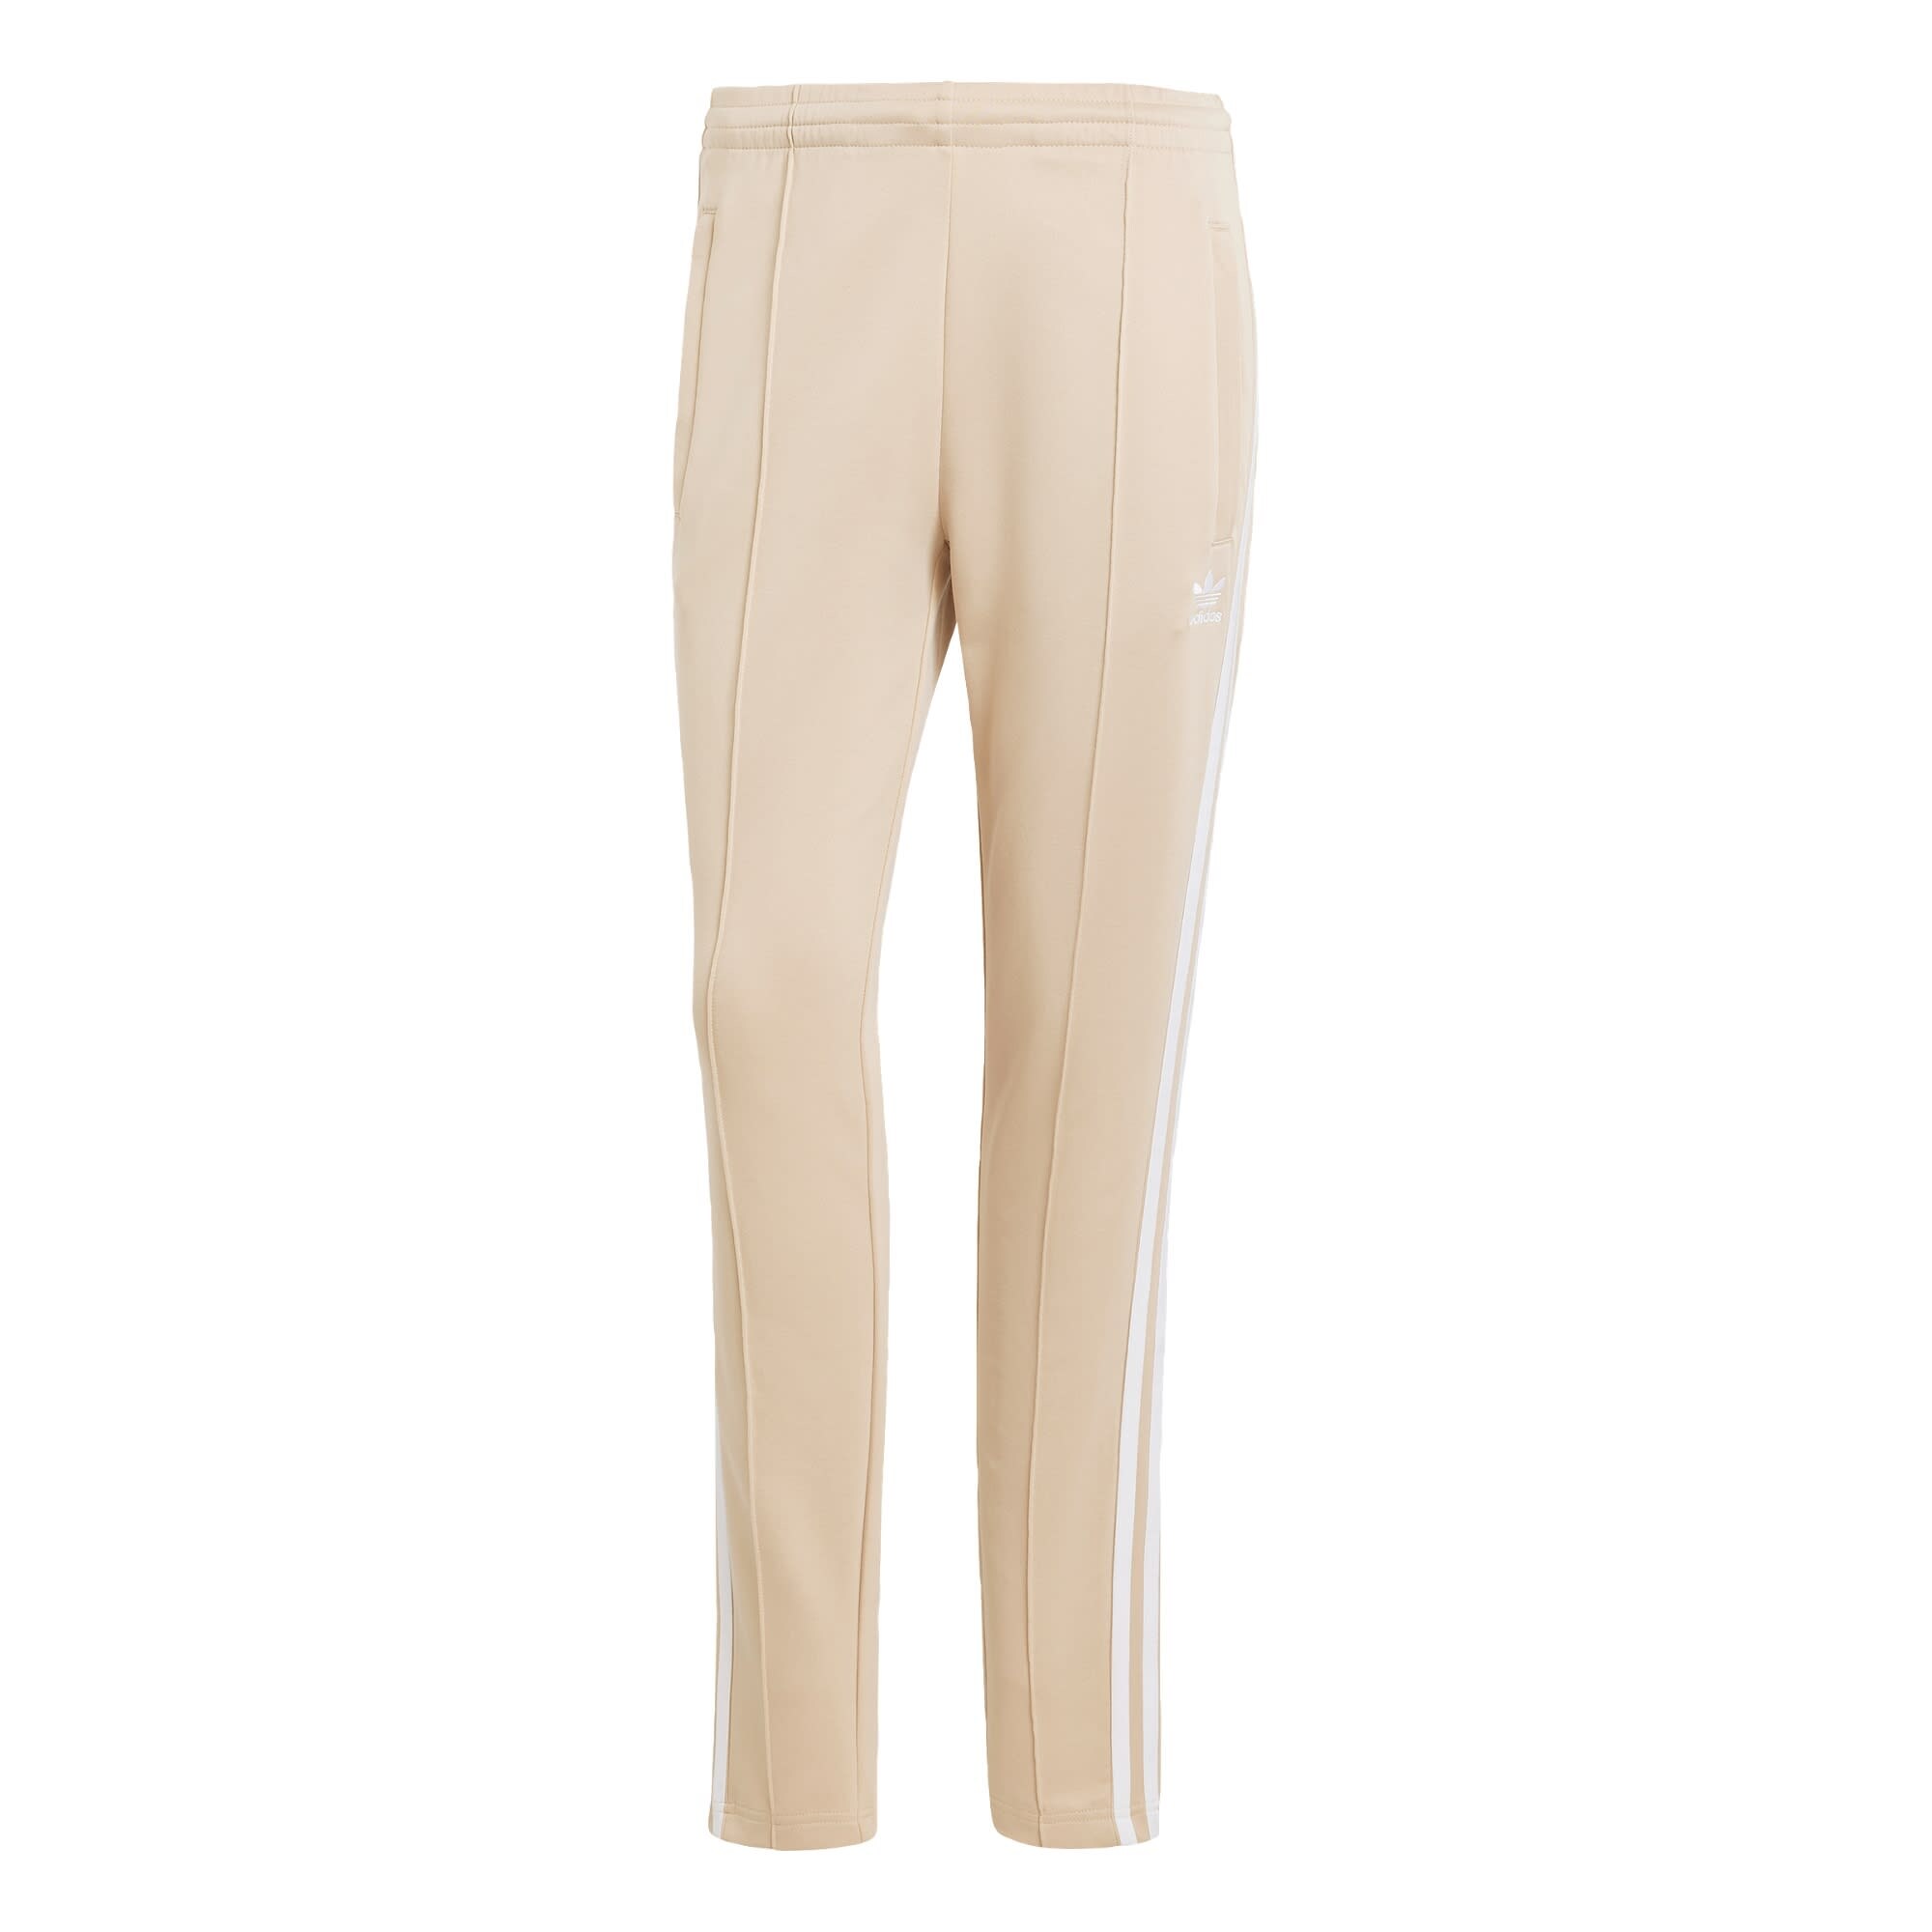 ADIDAS ORIGINALS Pantalon 'Adicolor Sst' beige / blanc en promo-Adidas Originals 1